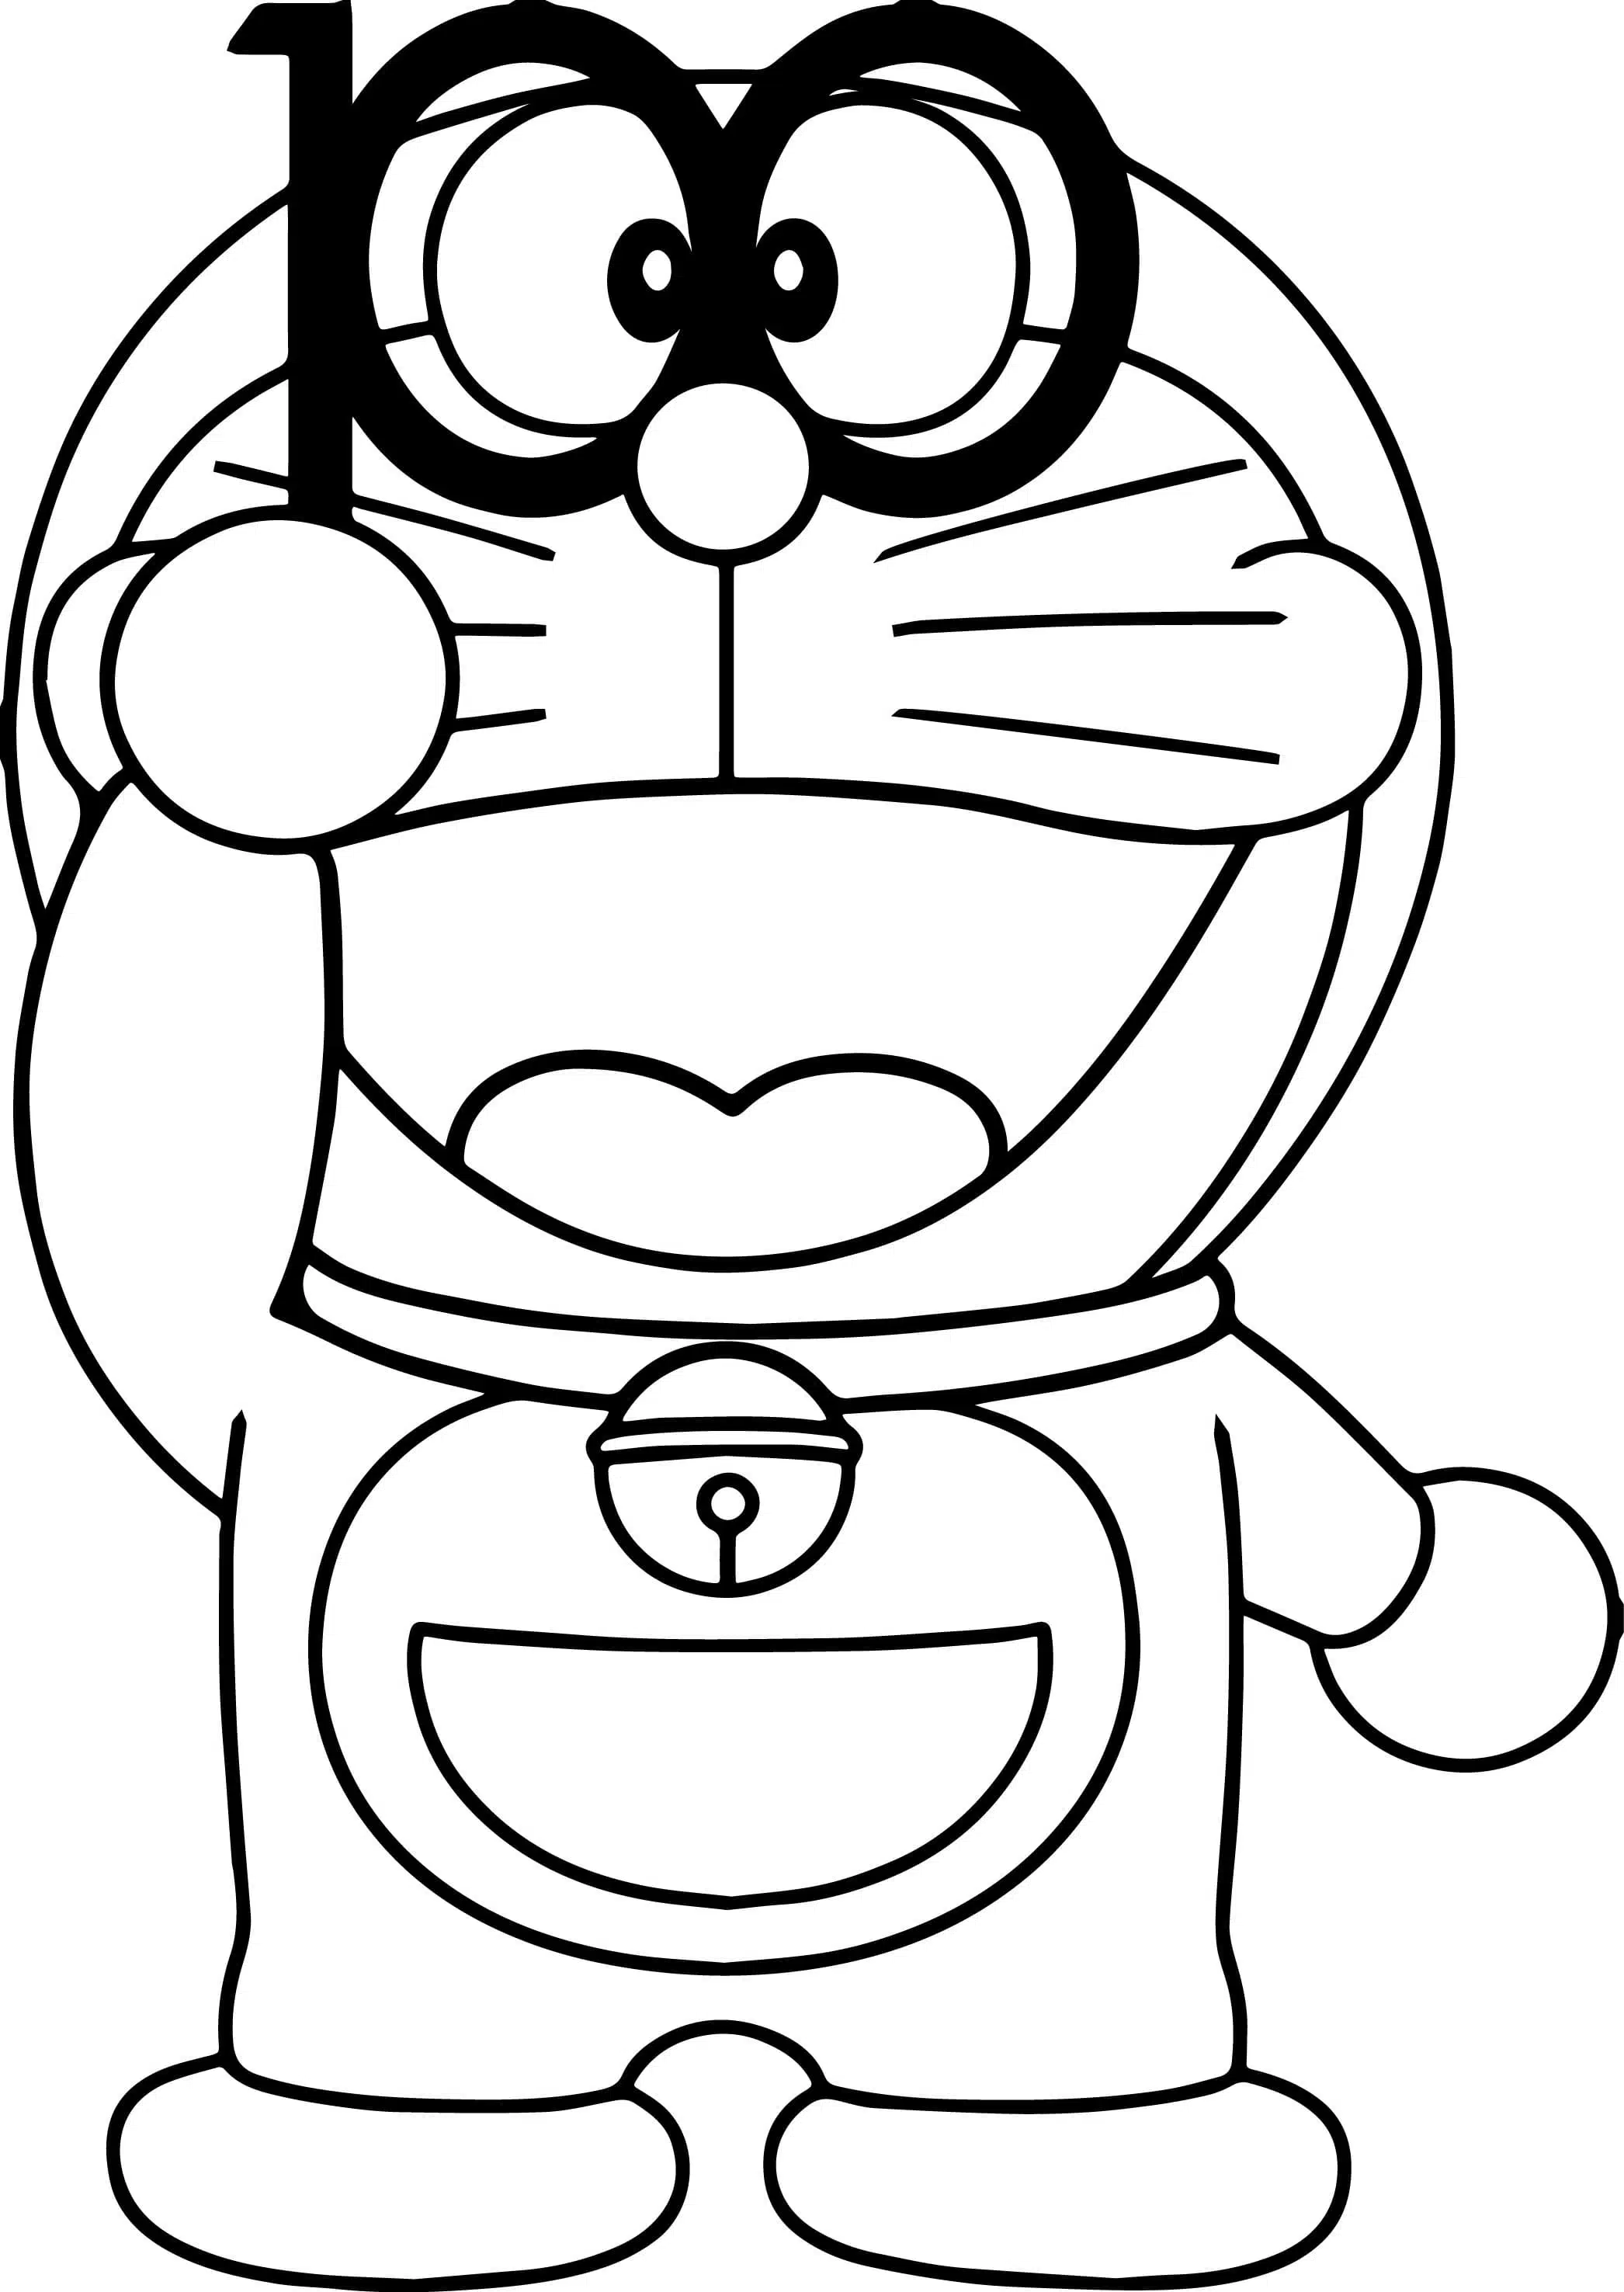 Doraemon 14